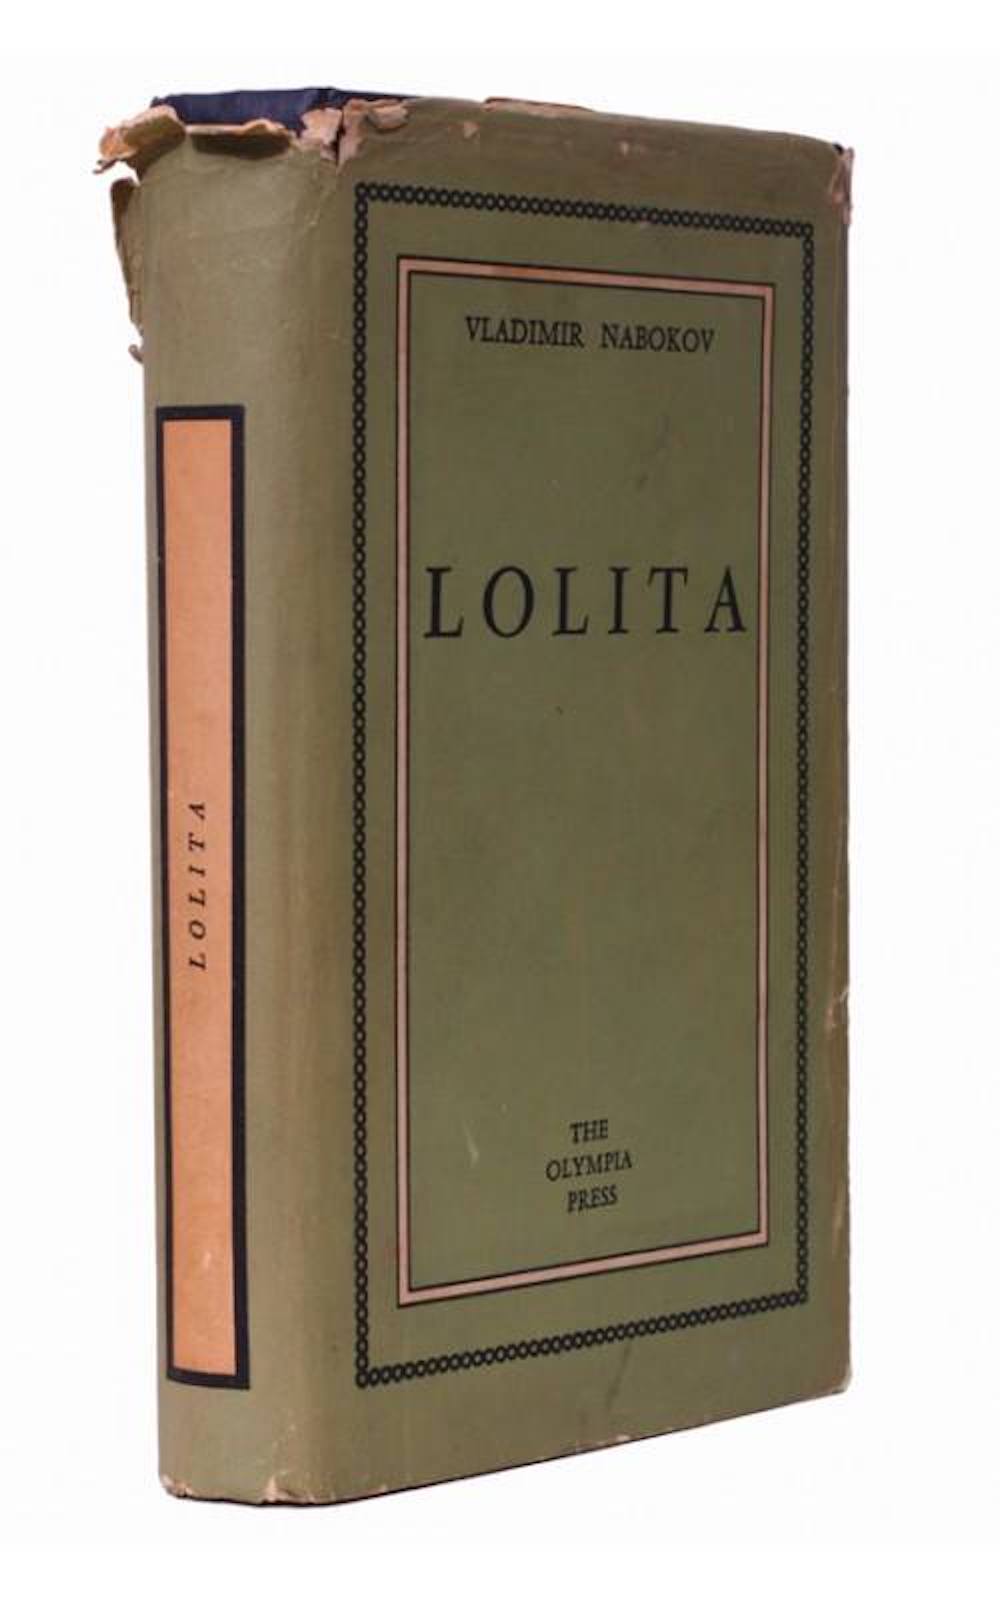 First edition of <em>Lolita</em> published by Olympia Press in 1955. Image: Vladimir Nabokov / Facebook 